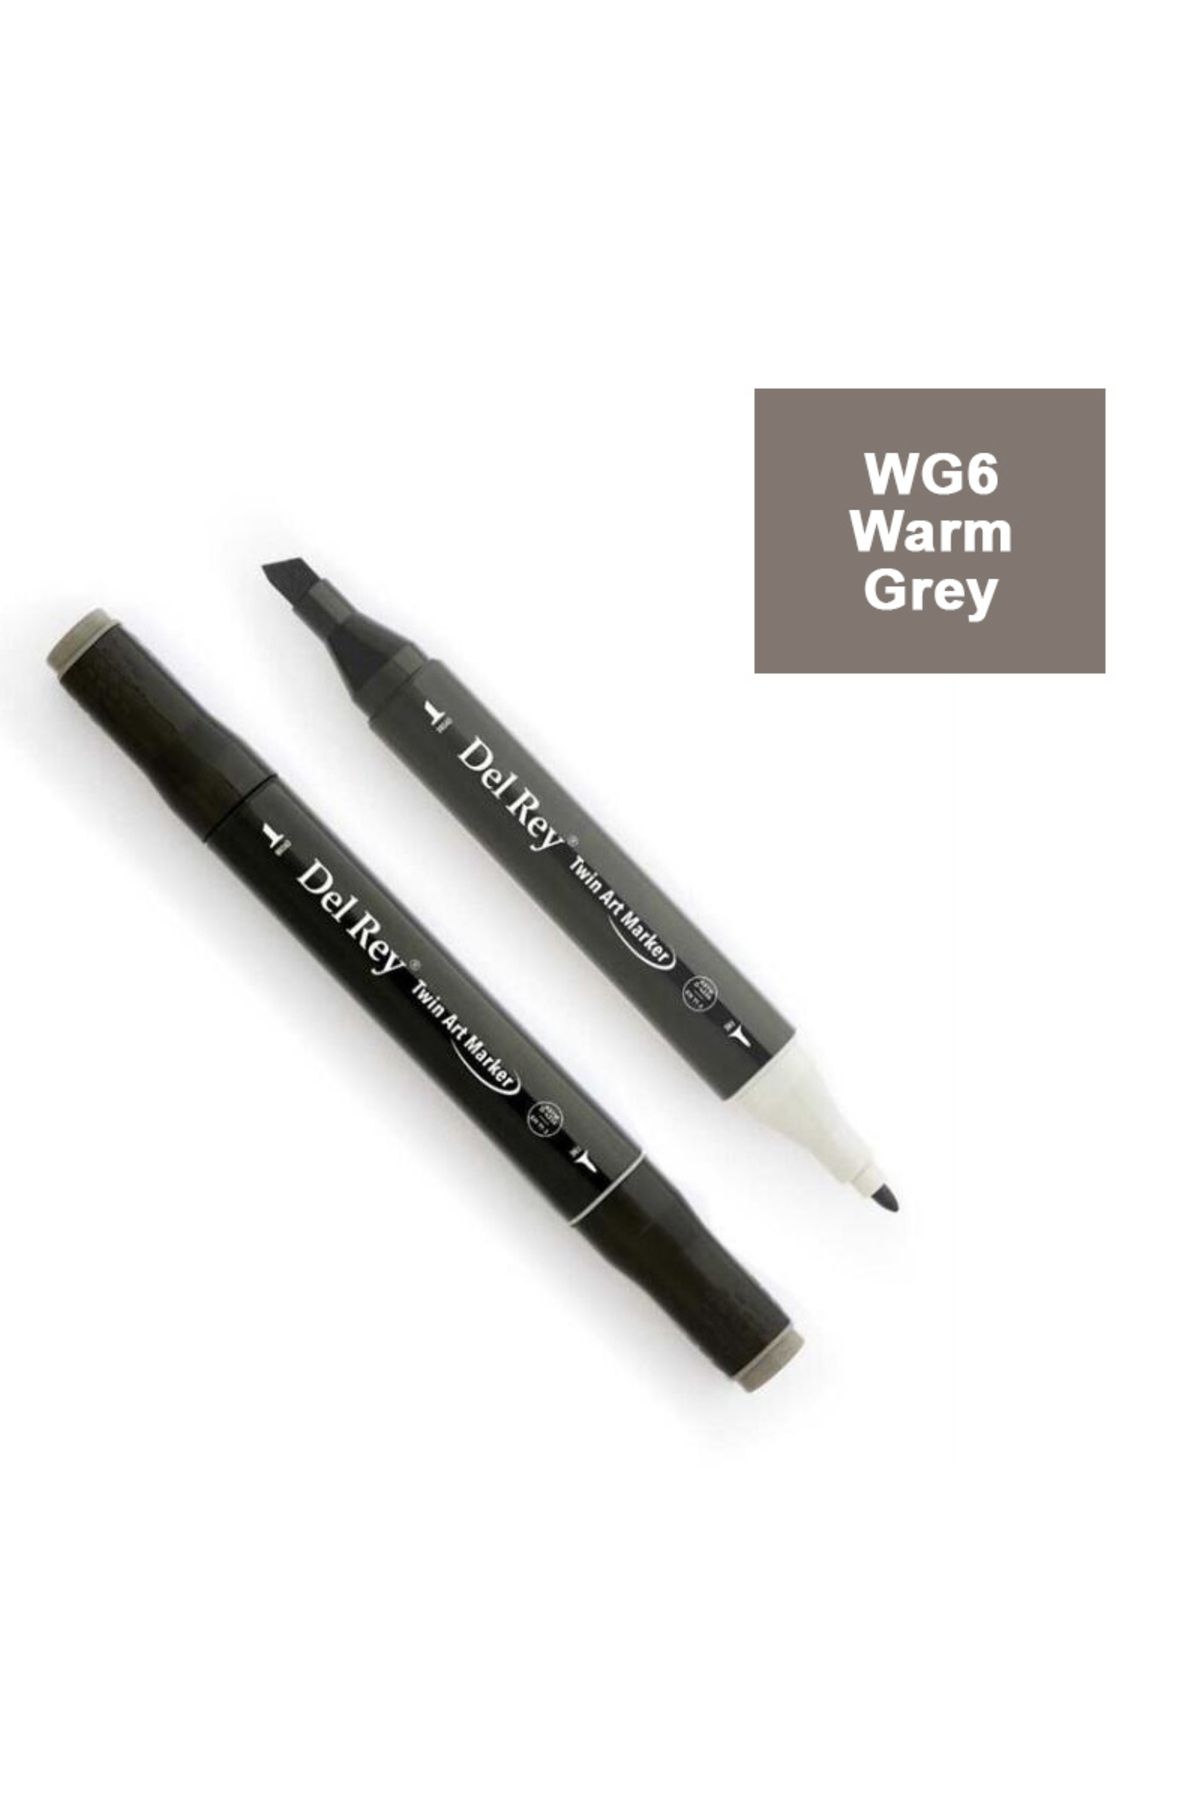 Pebeo Del Rey Twın Marker Wg6 Warm Grey Çift Uçlu Grafik Kalemi Mn-Drwg6